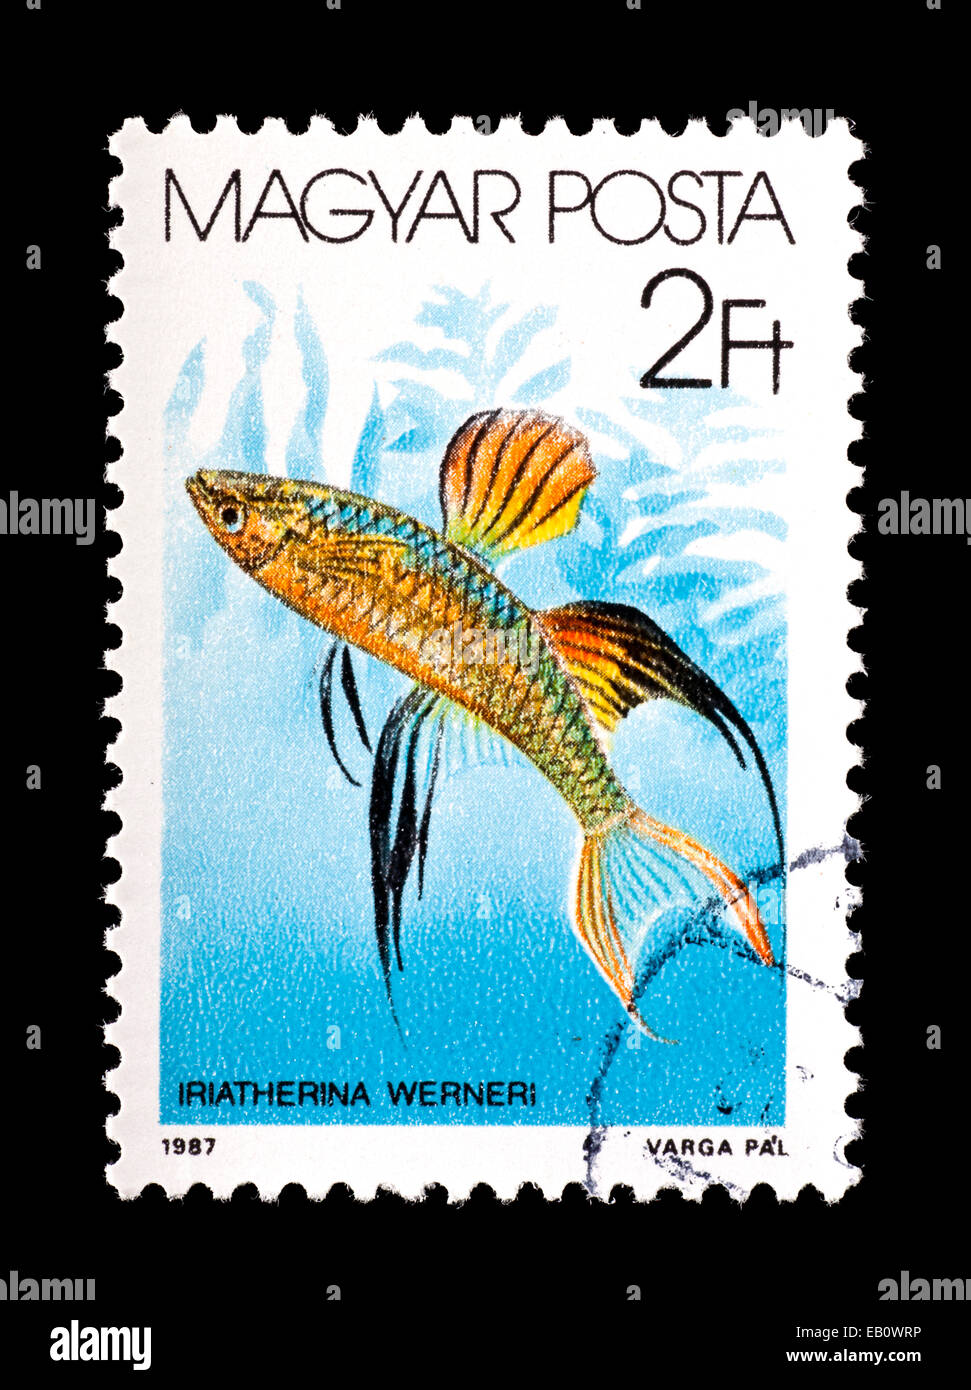 Postage stamp from Hungary depicting a threadfin rainbowfish or featherfin rainbowfish (Iriatherina werneri) Stock Photo